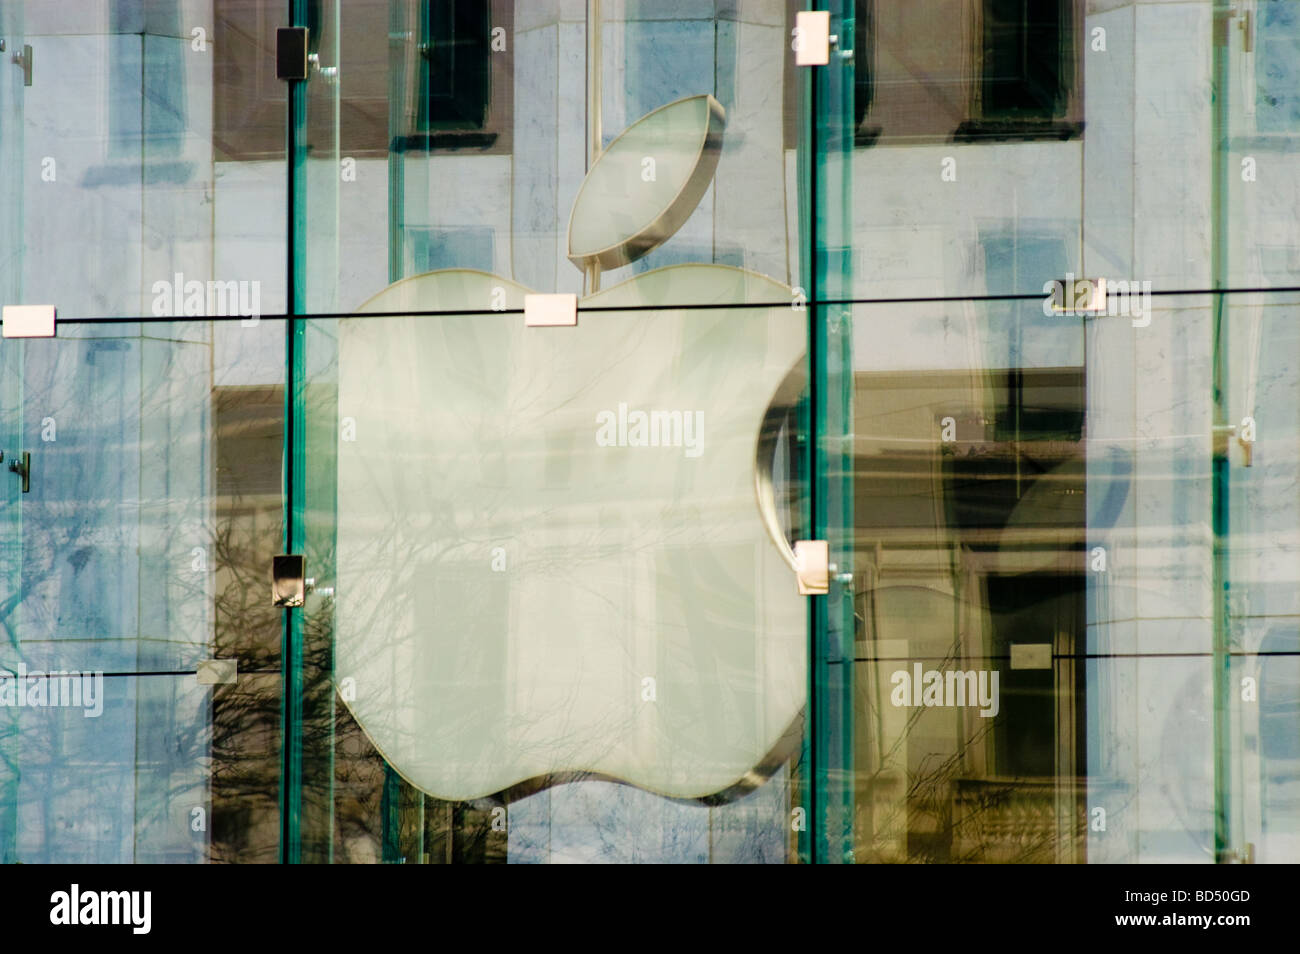 Apple Store glass building, 5th Avenue, Manhattan, New York City, USA Stock Photo